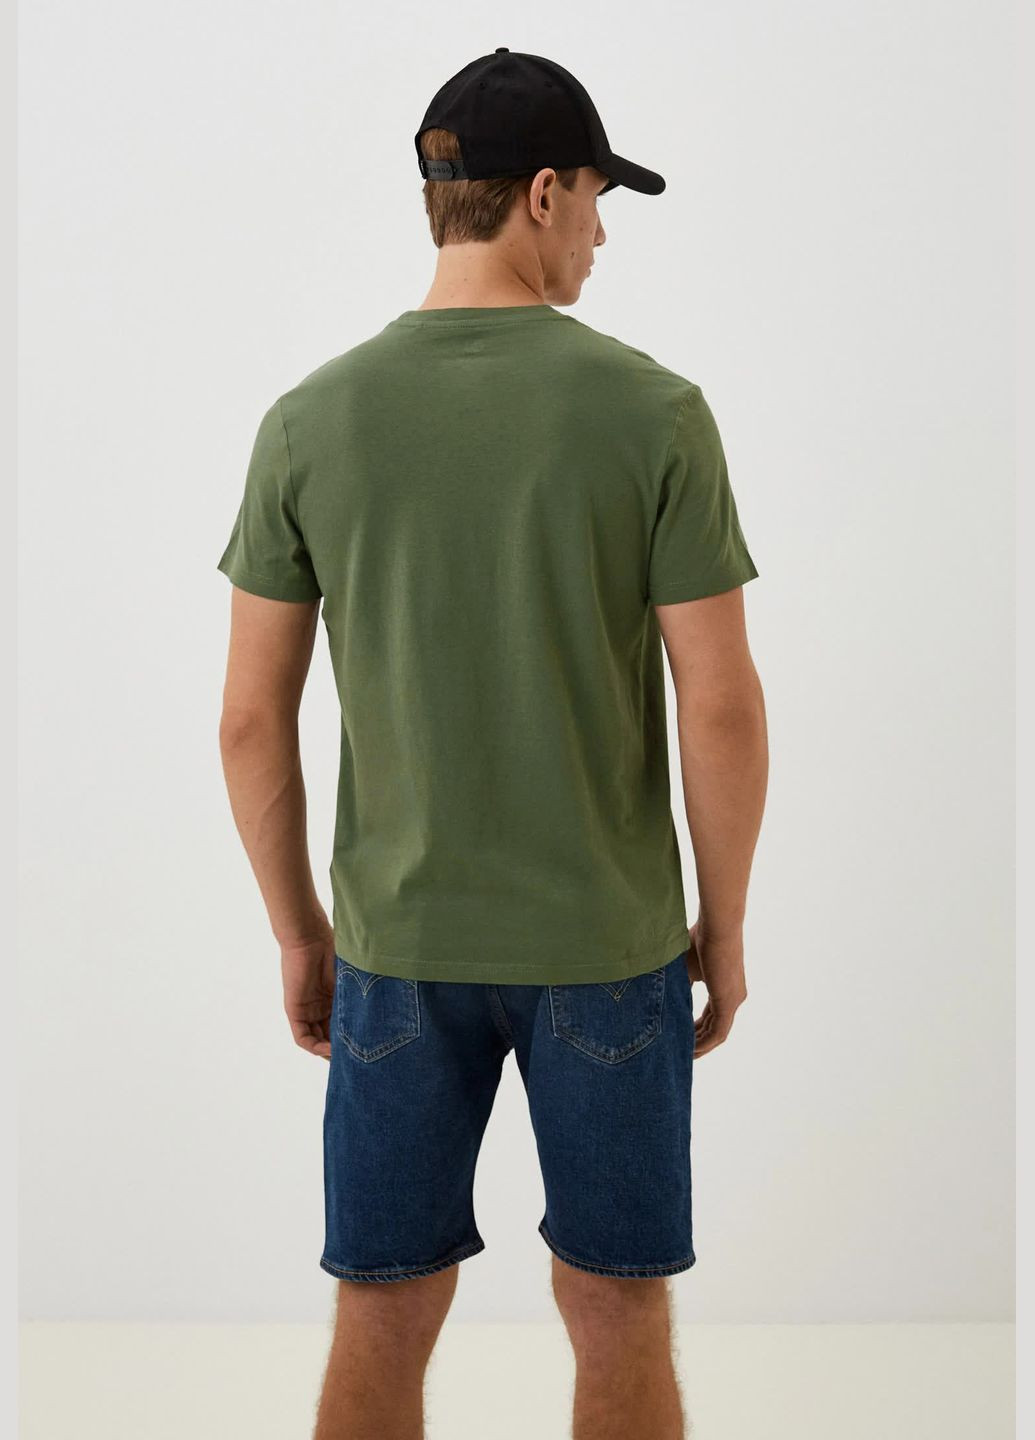 Хаки (оливковая) футболка с принтом Threadbare